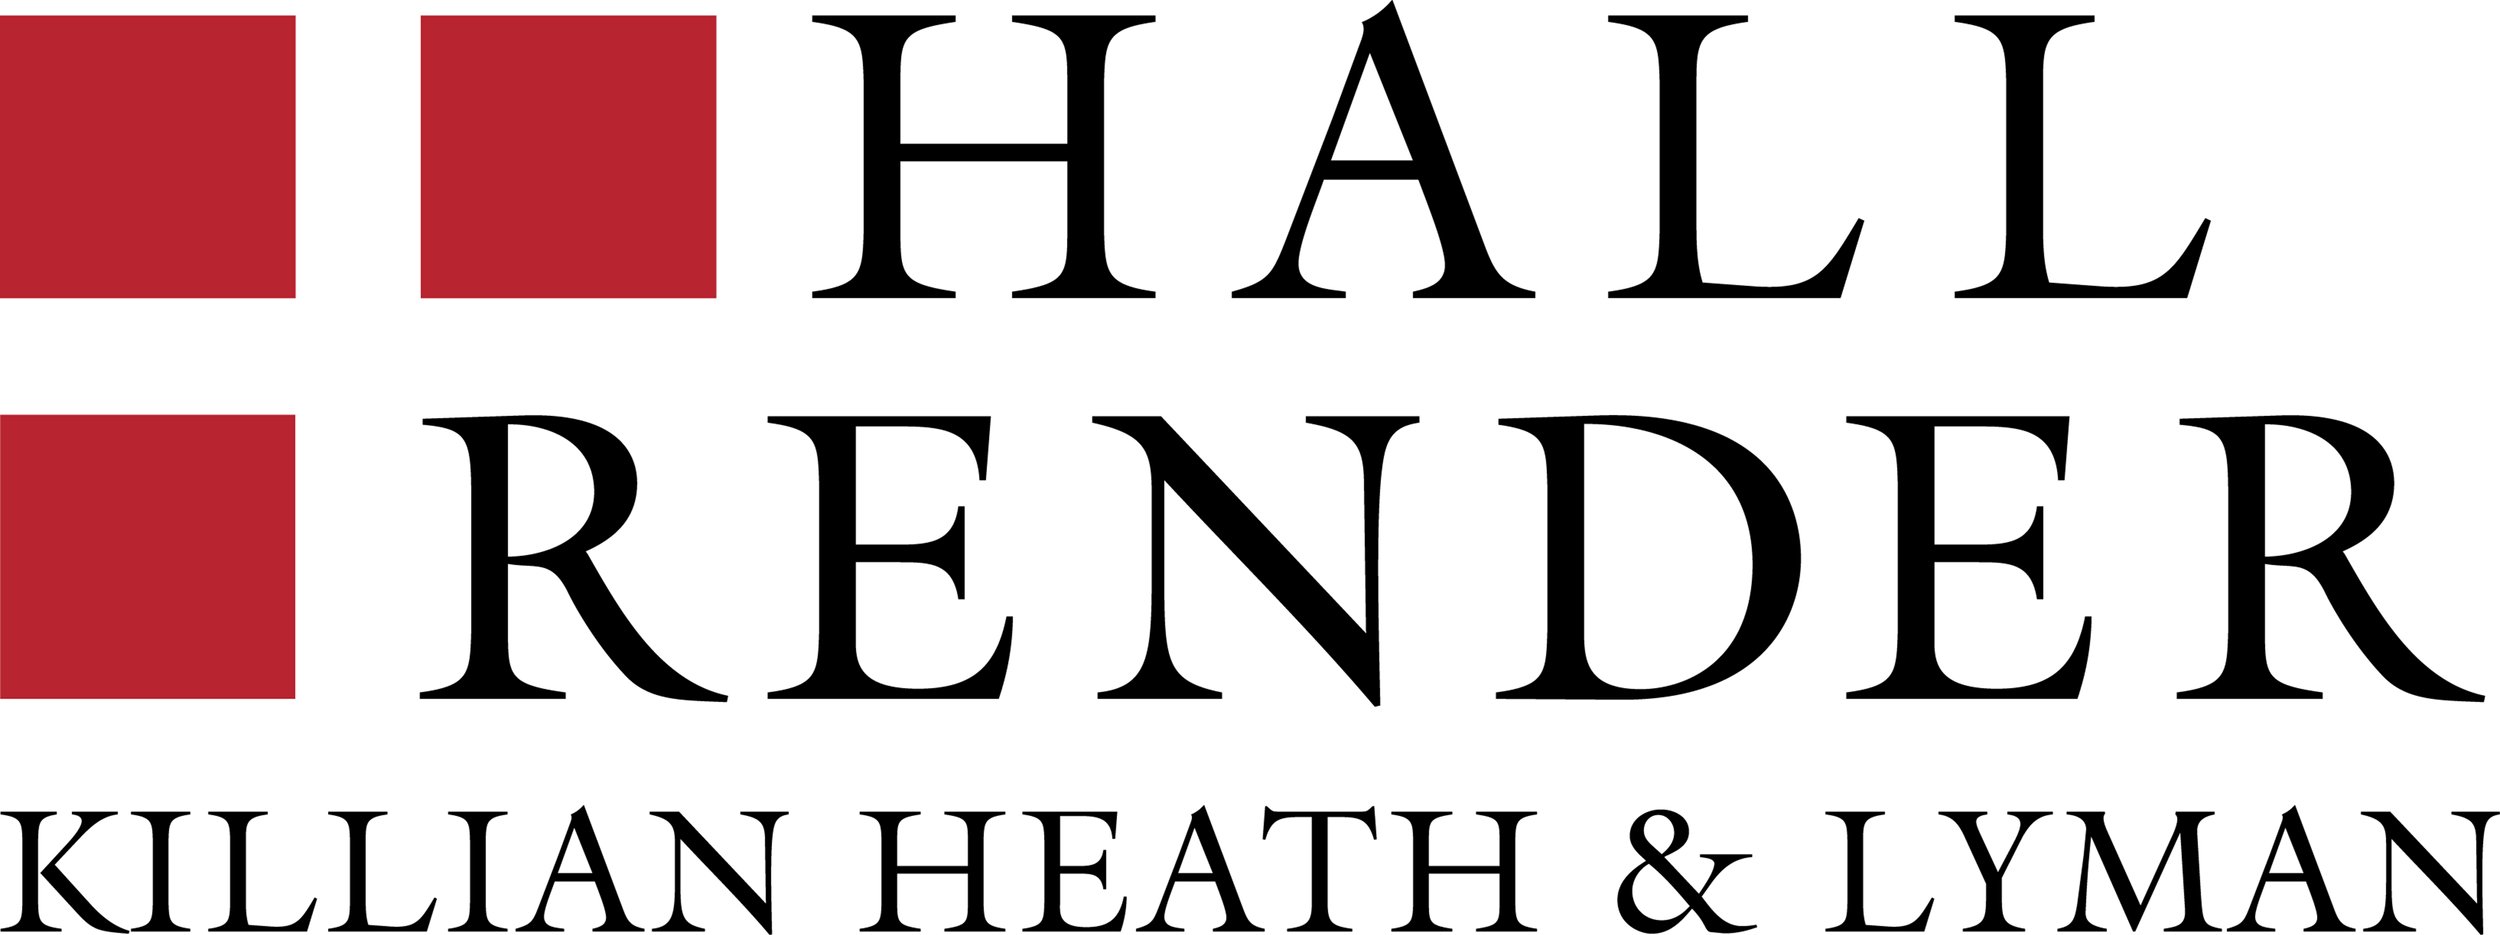 Hall Render Logo.jpg